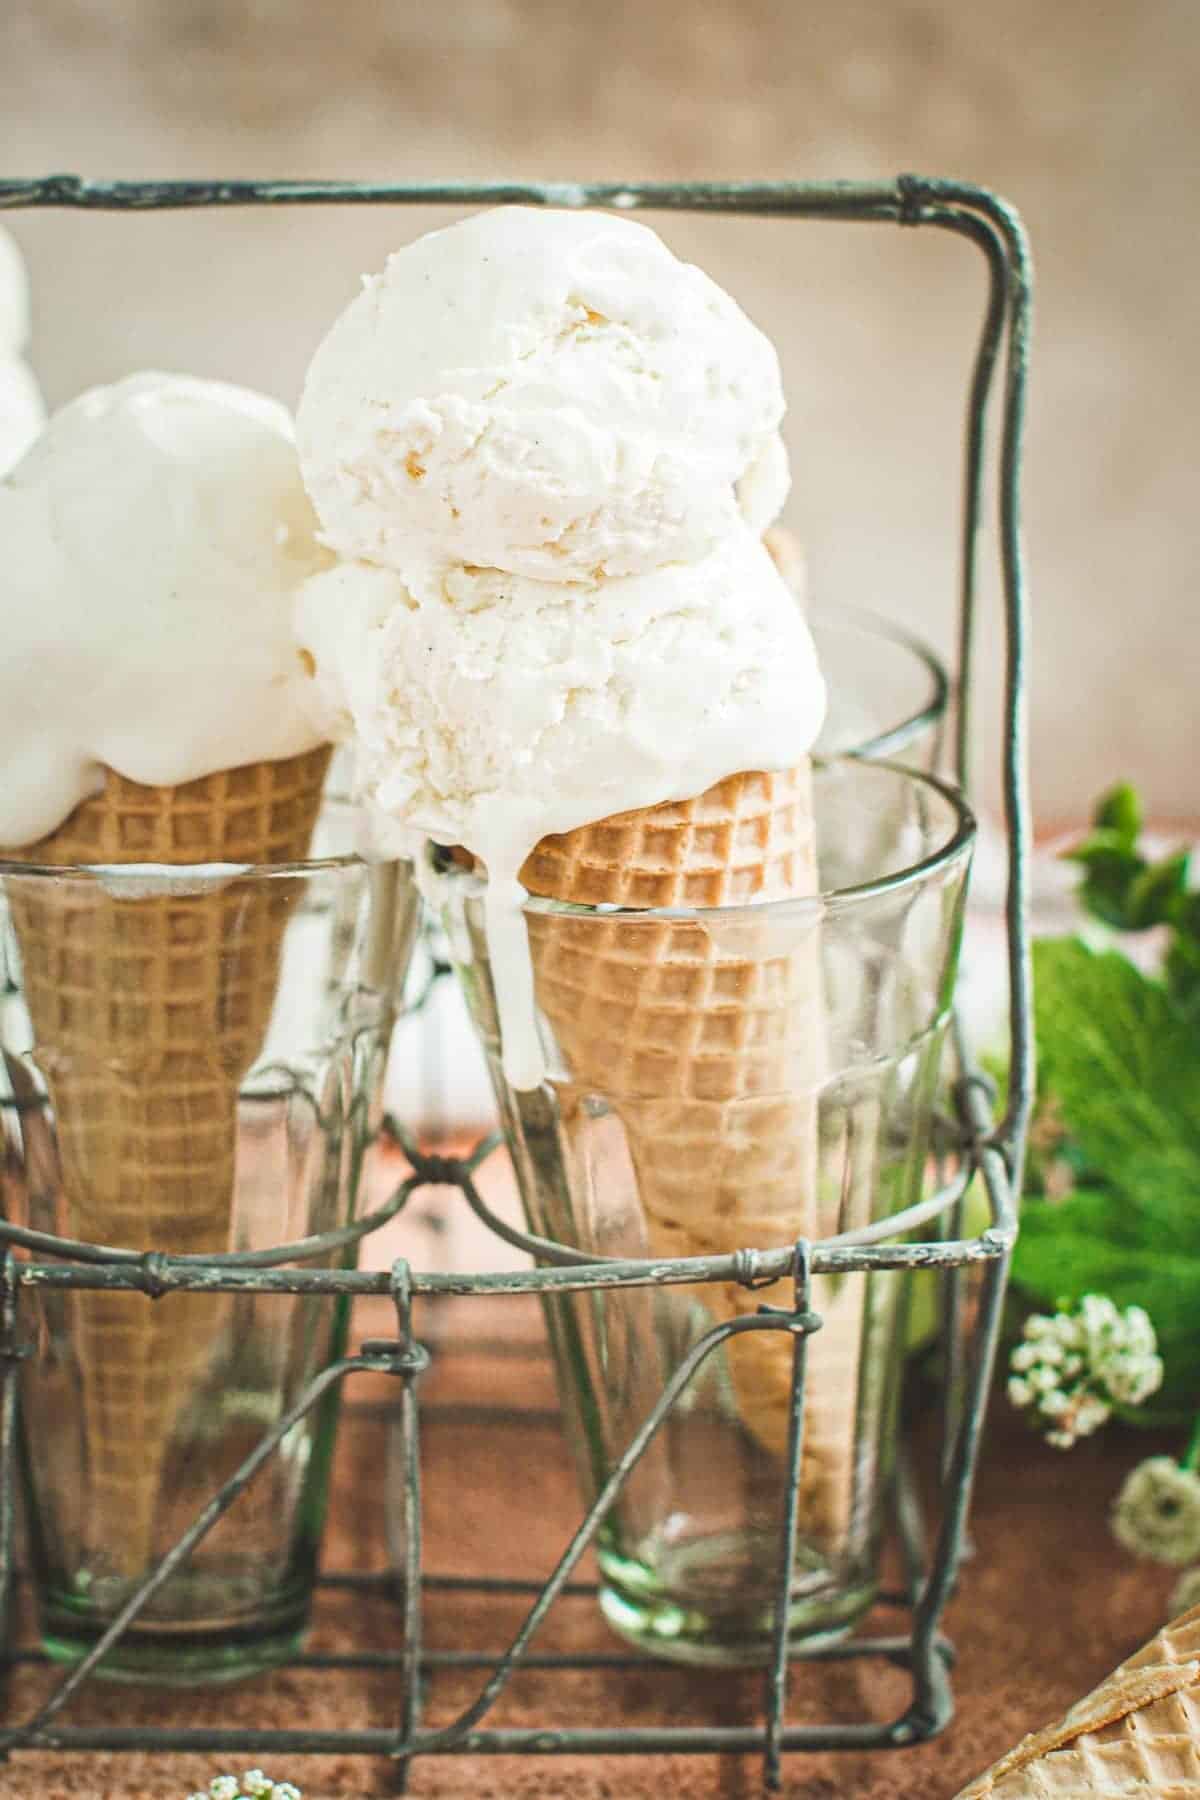 Homemade vanilla bean ice cream on cones sitting in glasses.